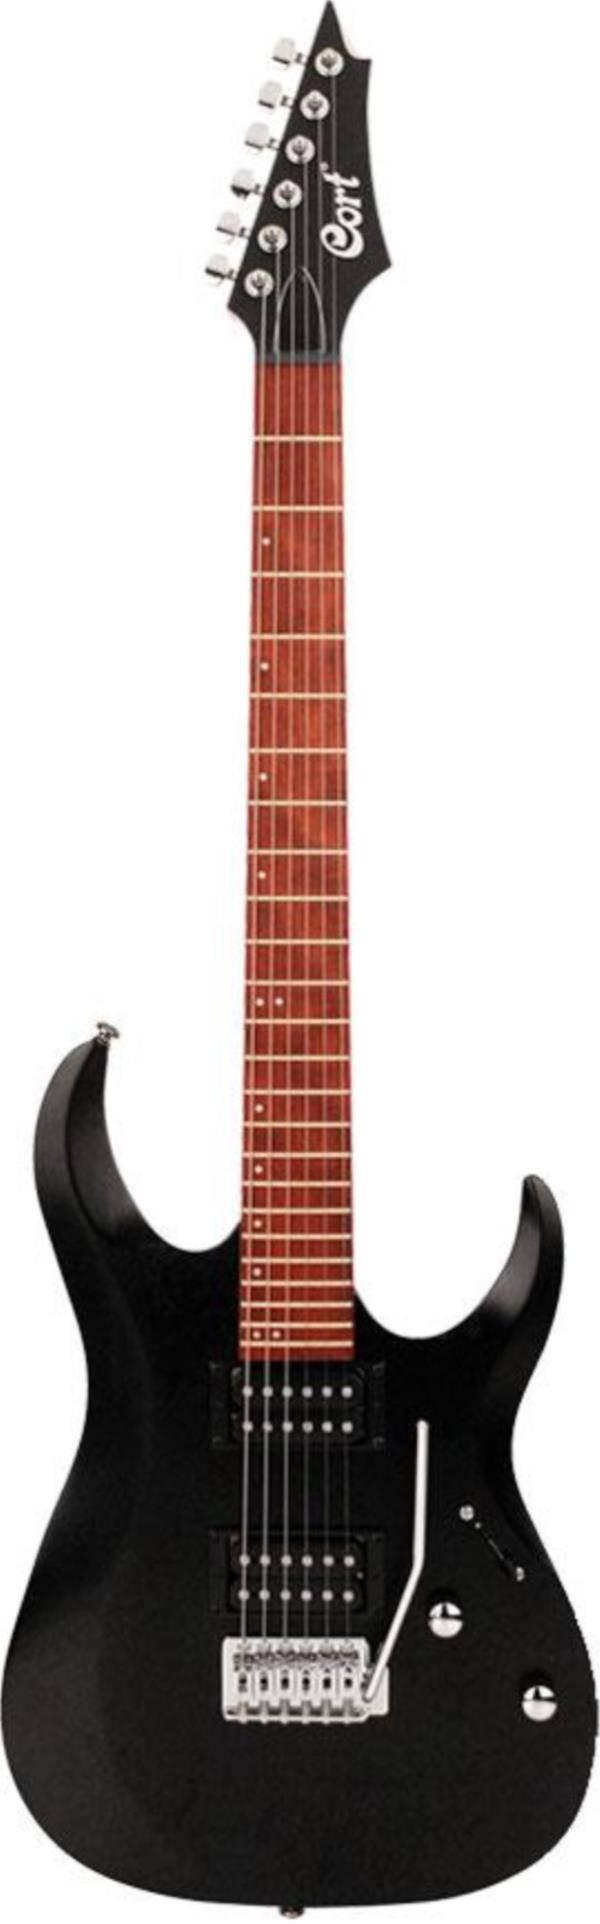 Cort - Guitarra Eléctrica X, Color: Negro Mate Mod.X100-OPBK_21